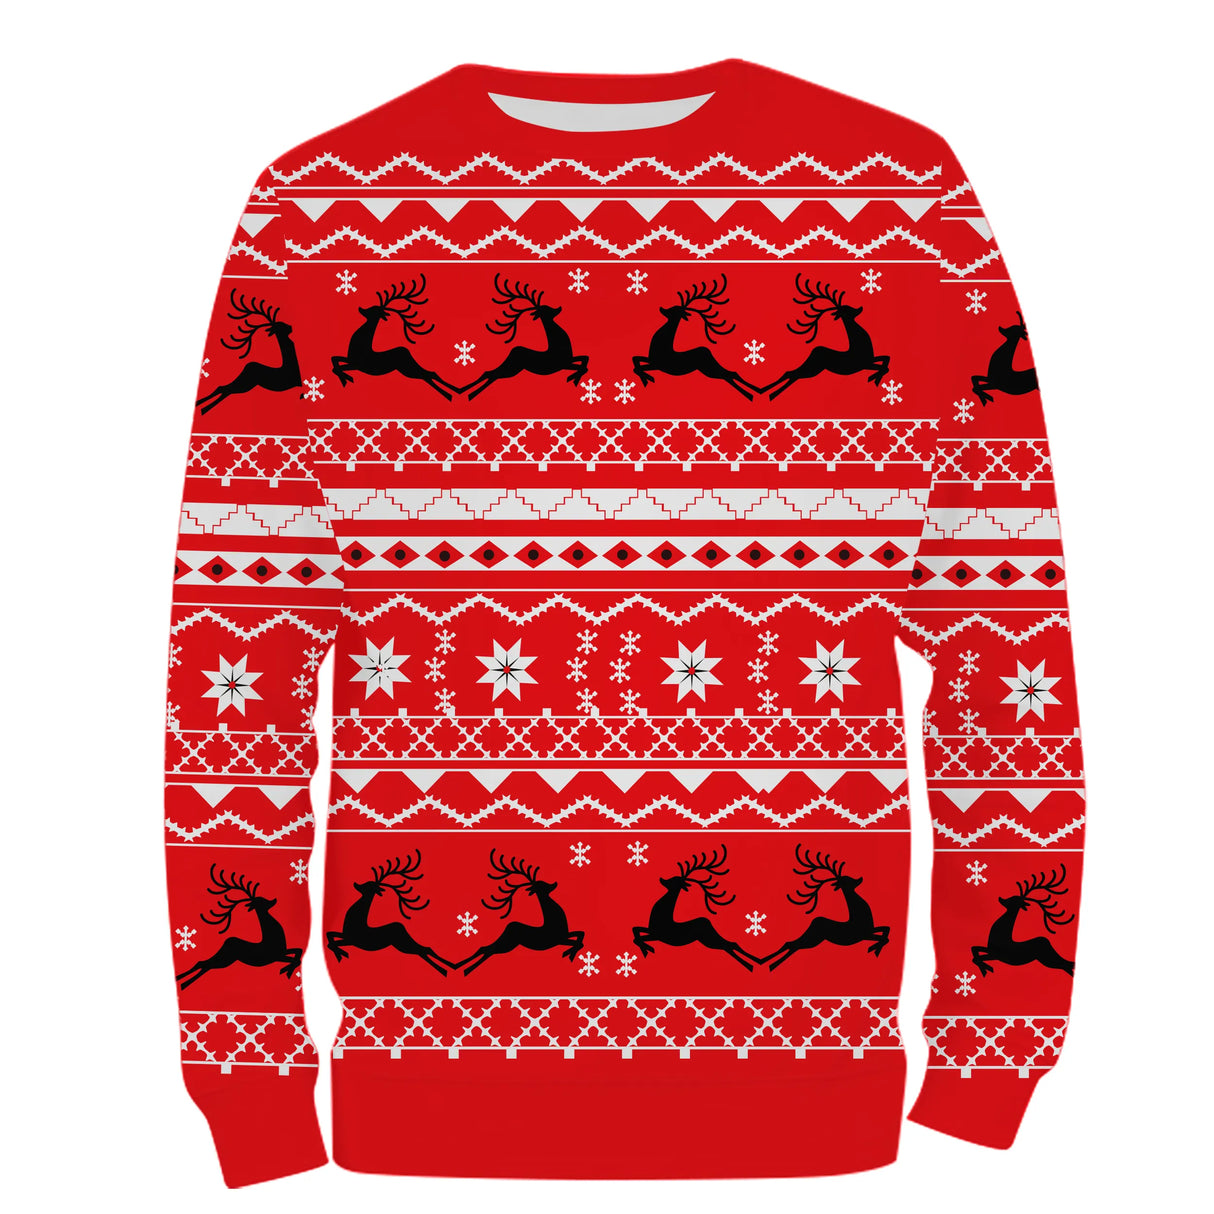 Red Christmas Sweater, Deer Hunting, Christmas Gift for Hunter - CT12112244